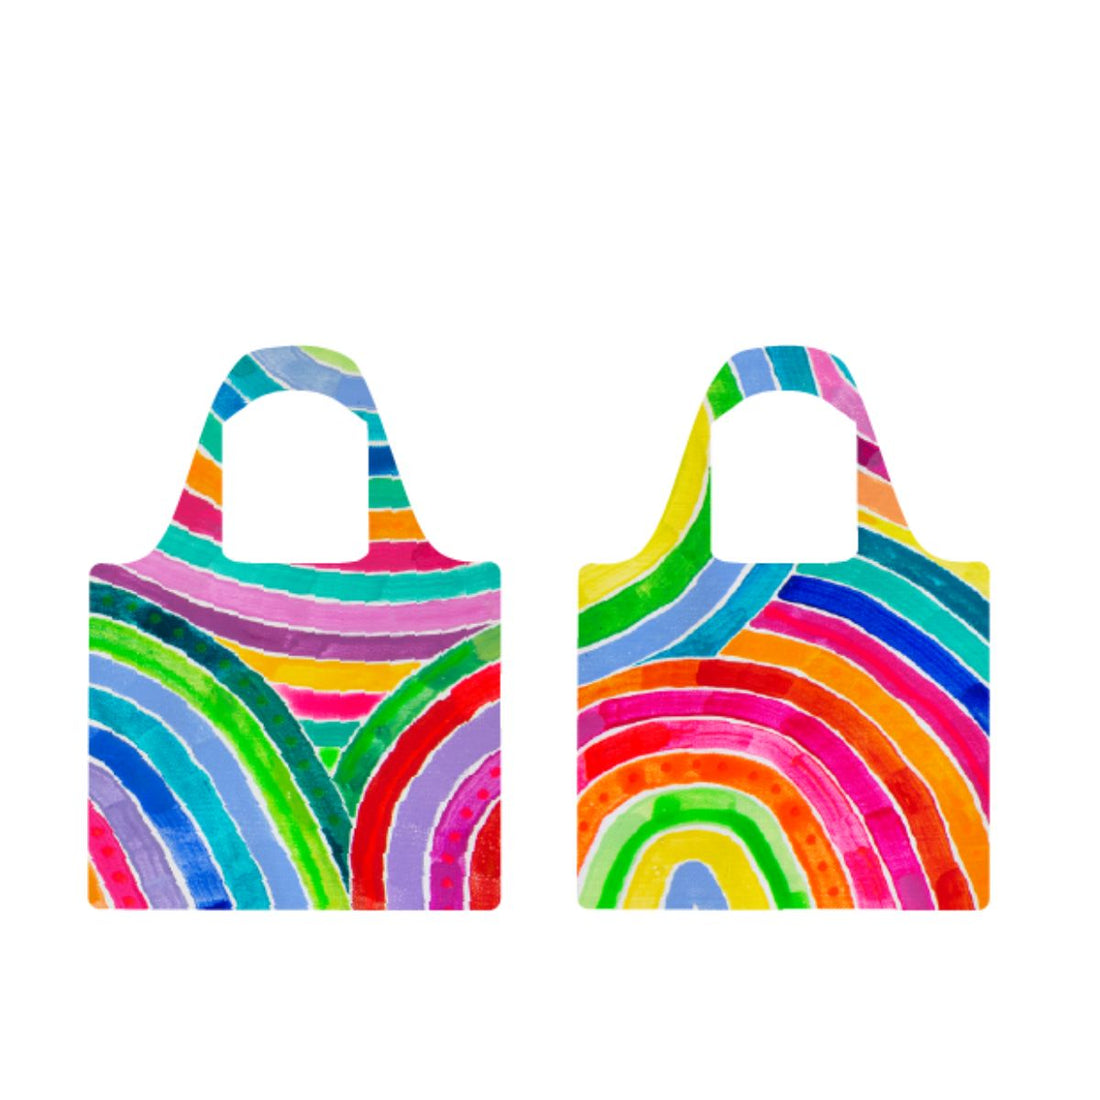 RO x Lordy Dordie Rainbows Shopper Bag